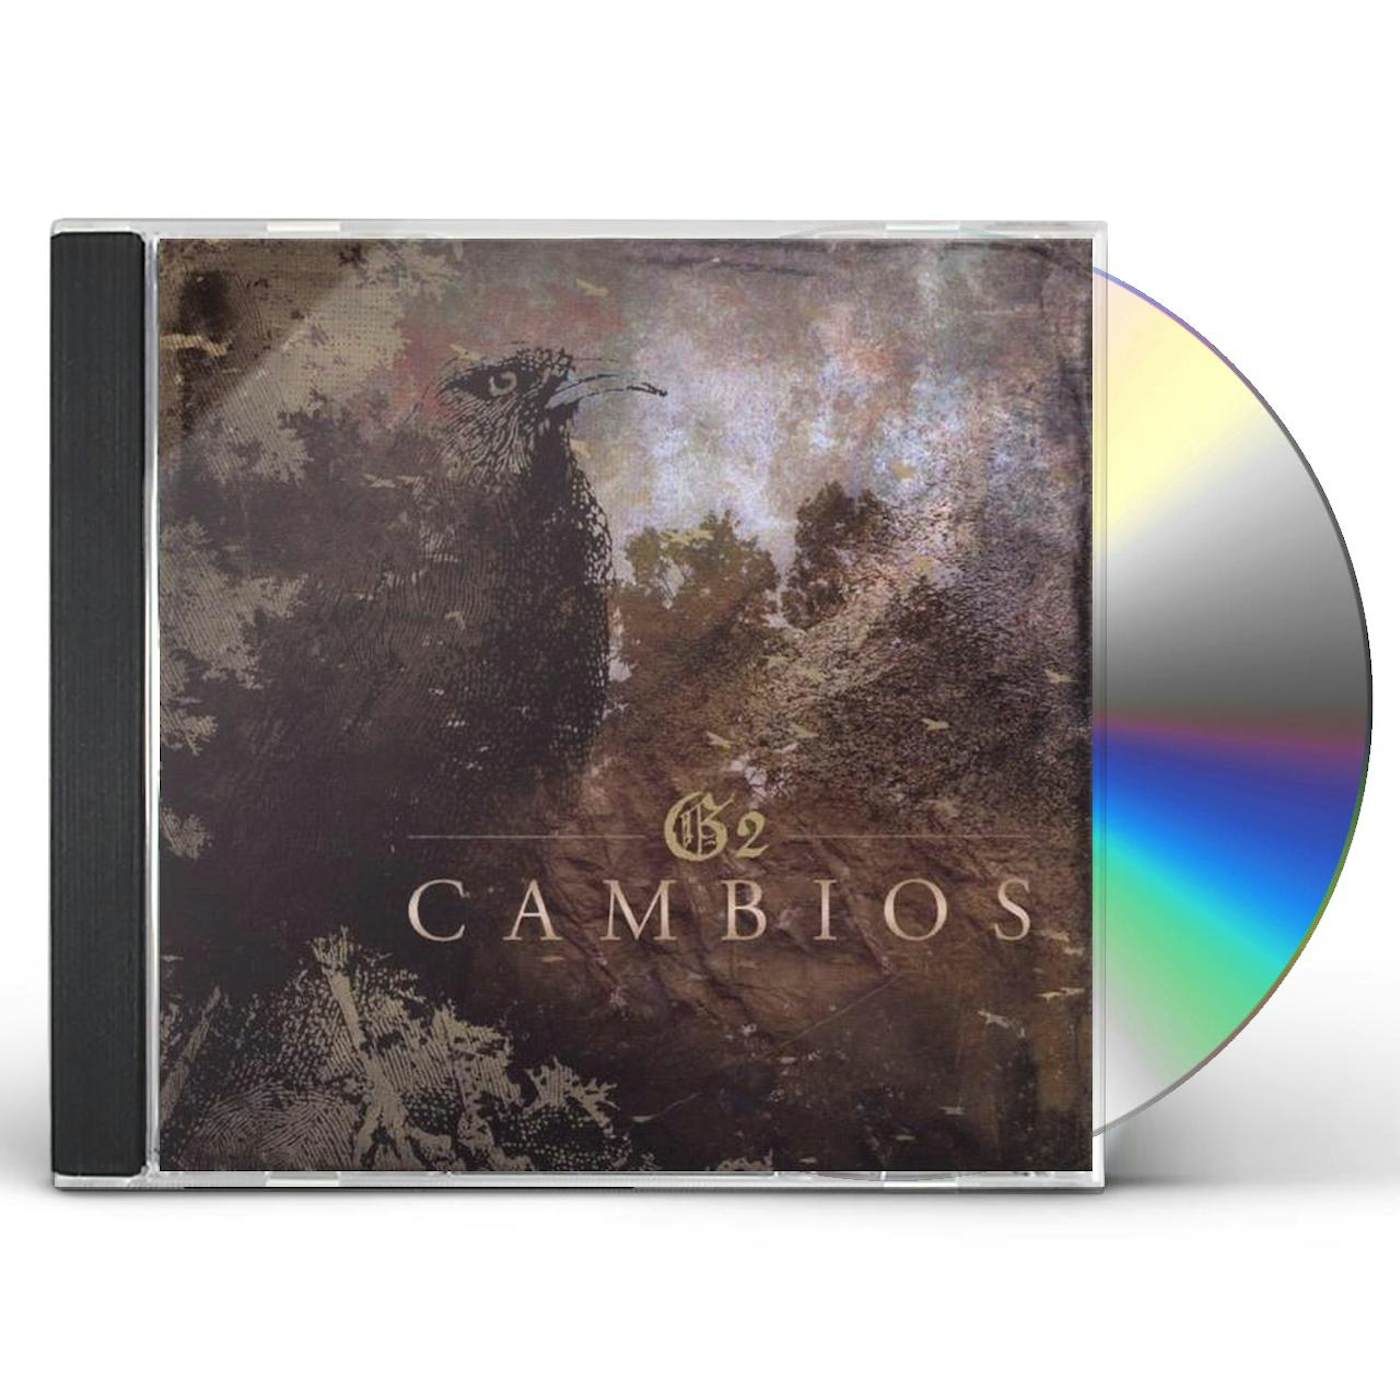 G2 CAMBIOS CD